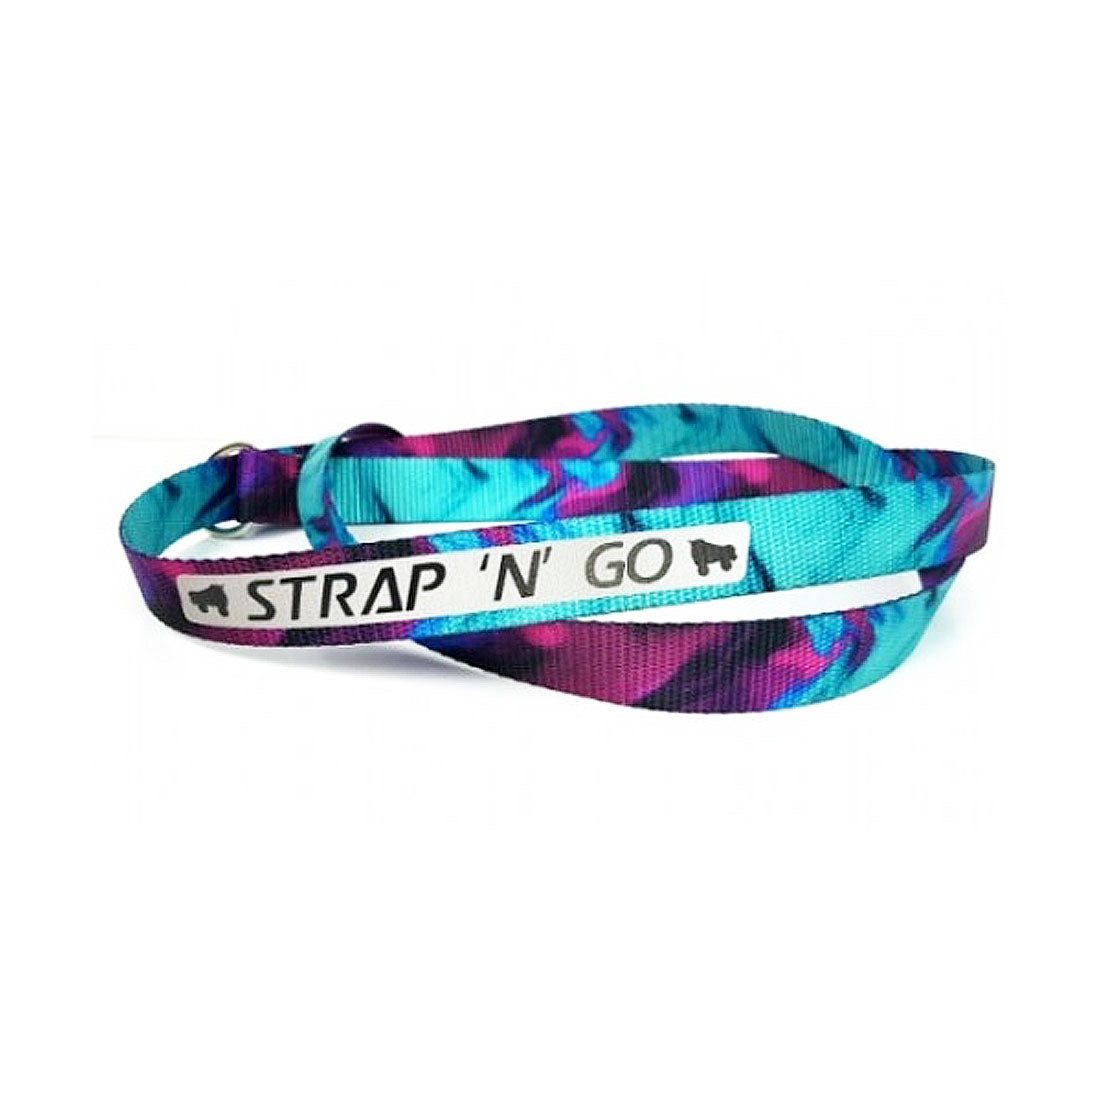 Strap N Go Skate Noose/Leash - Patterns Wicked Purple Roller Skate Accessories